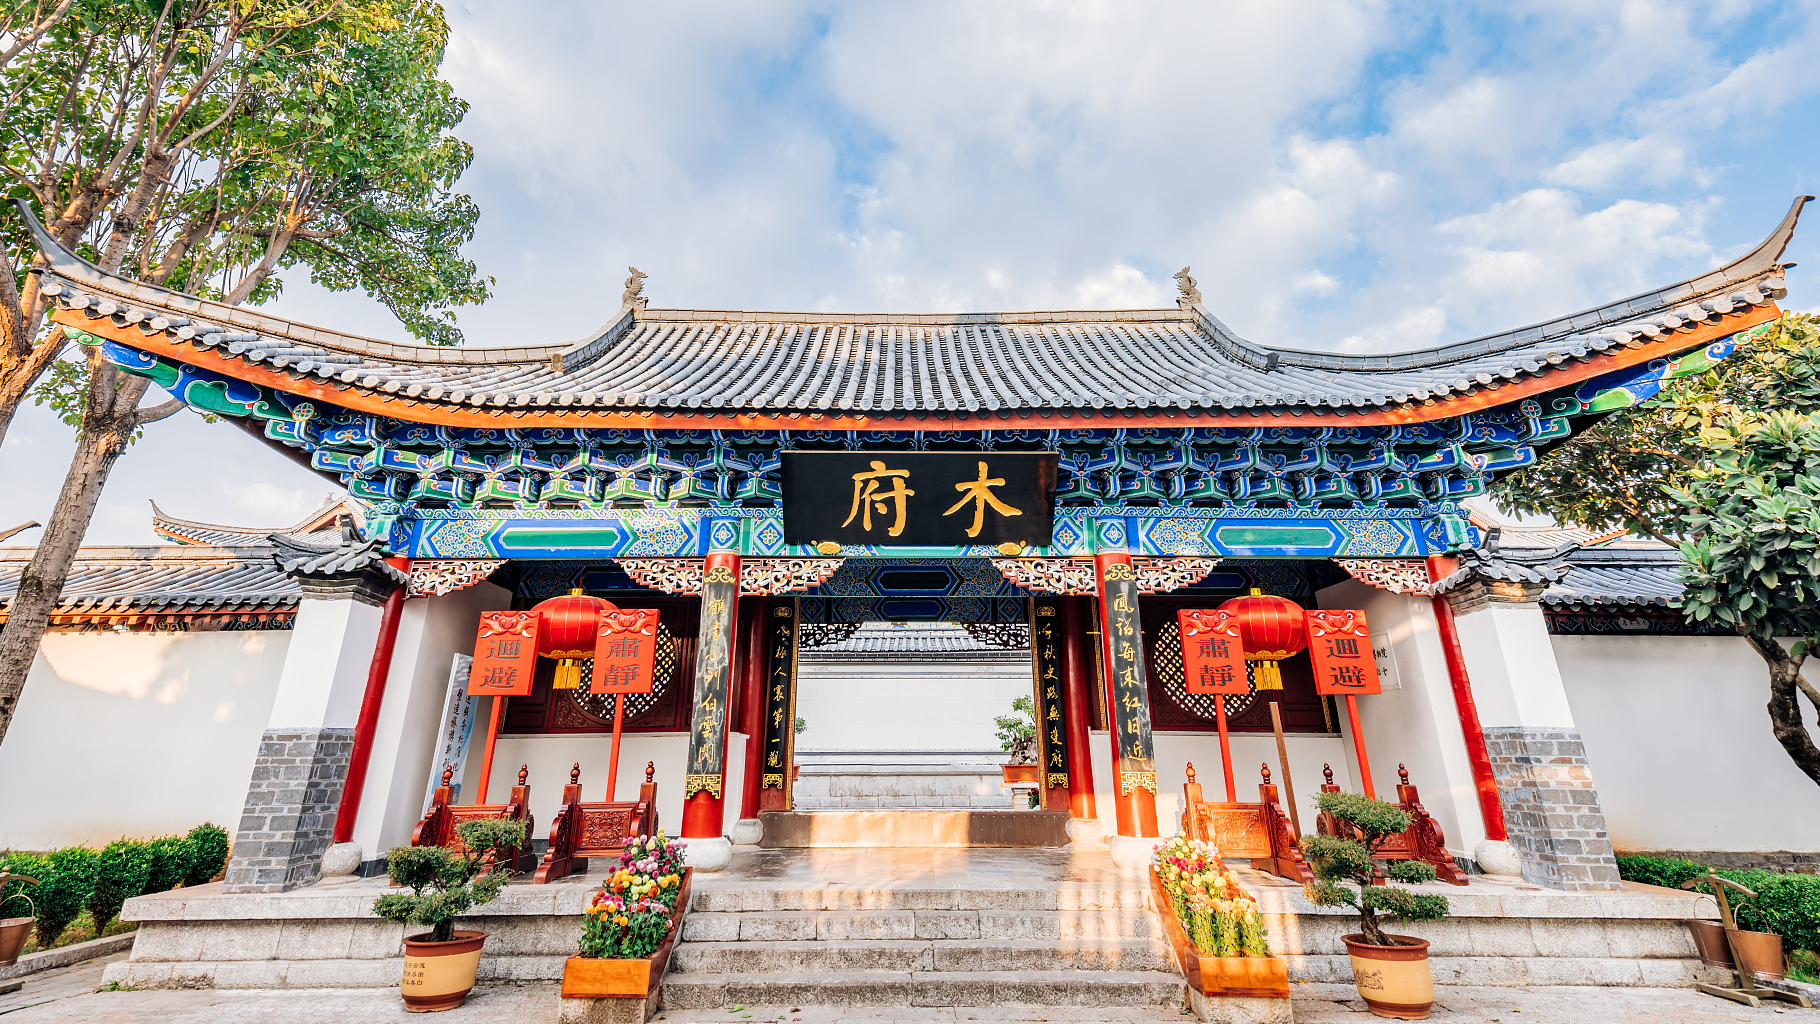 Live: Explore enchanting scenery of Mu's Residence in southwest China